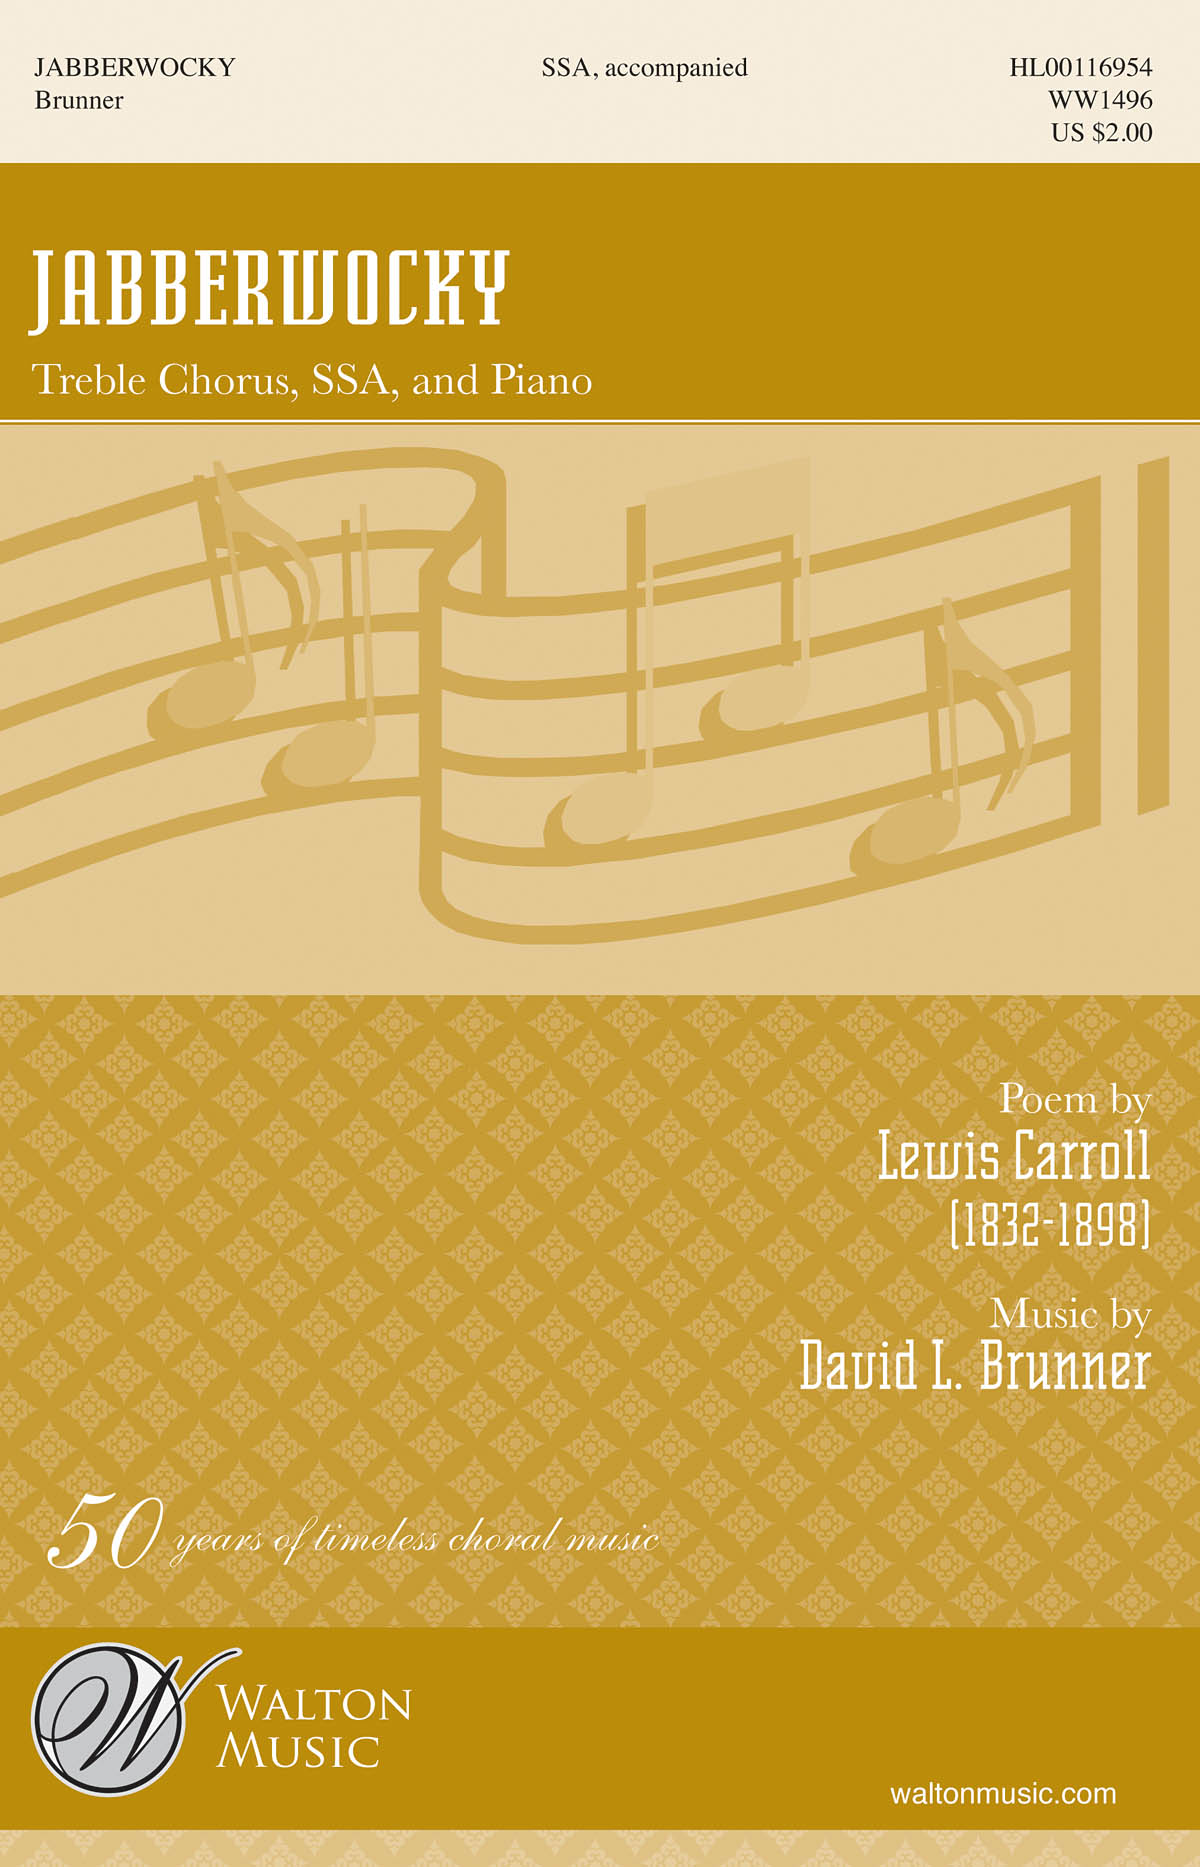 David L. Brunner Lewis Carroll: Jabberwocky: Upper Voices a Cappella: Vocal